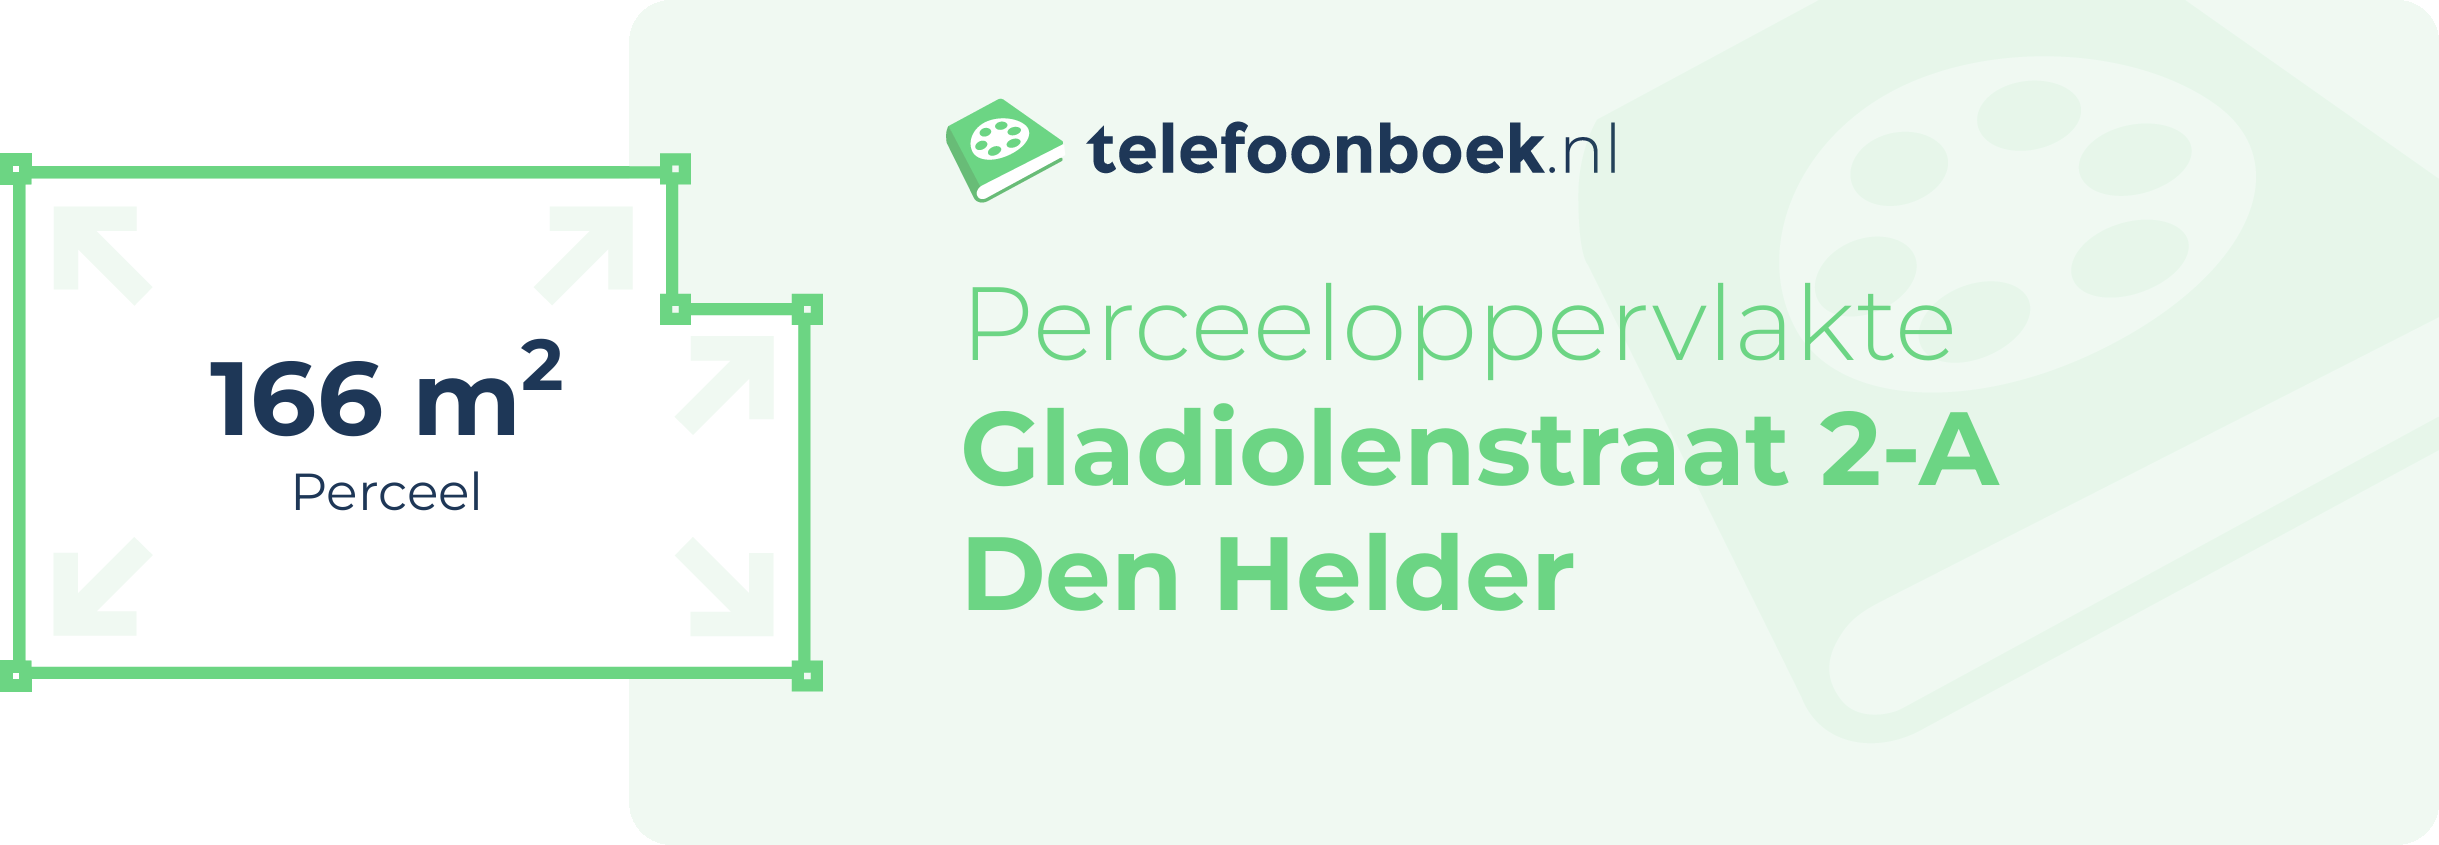 Perceeloppervlakte Gladiolenstraat 2-A Den Helder